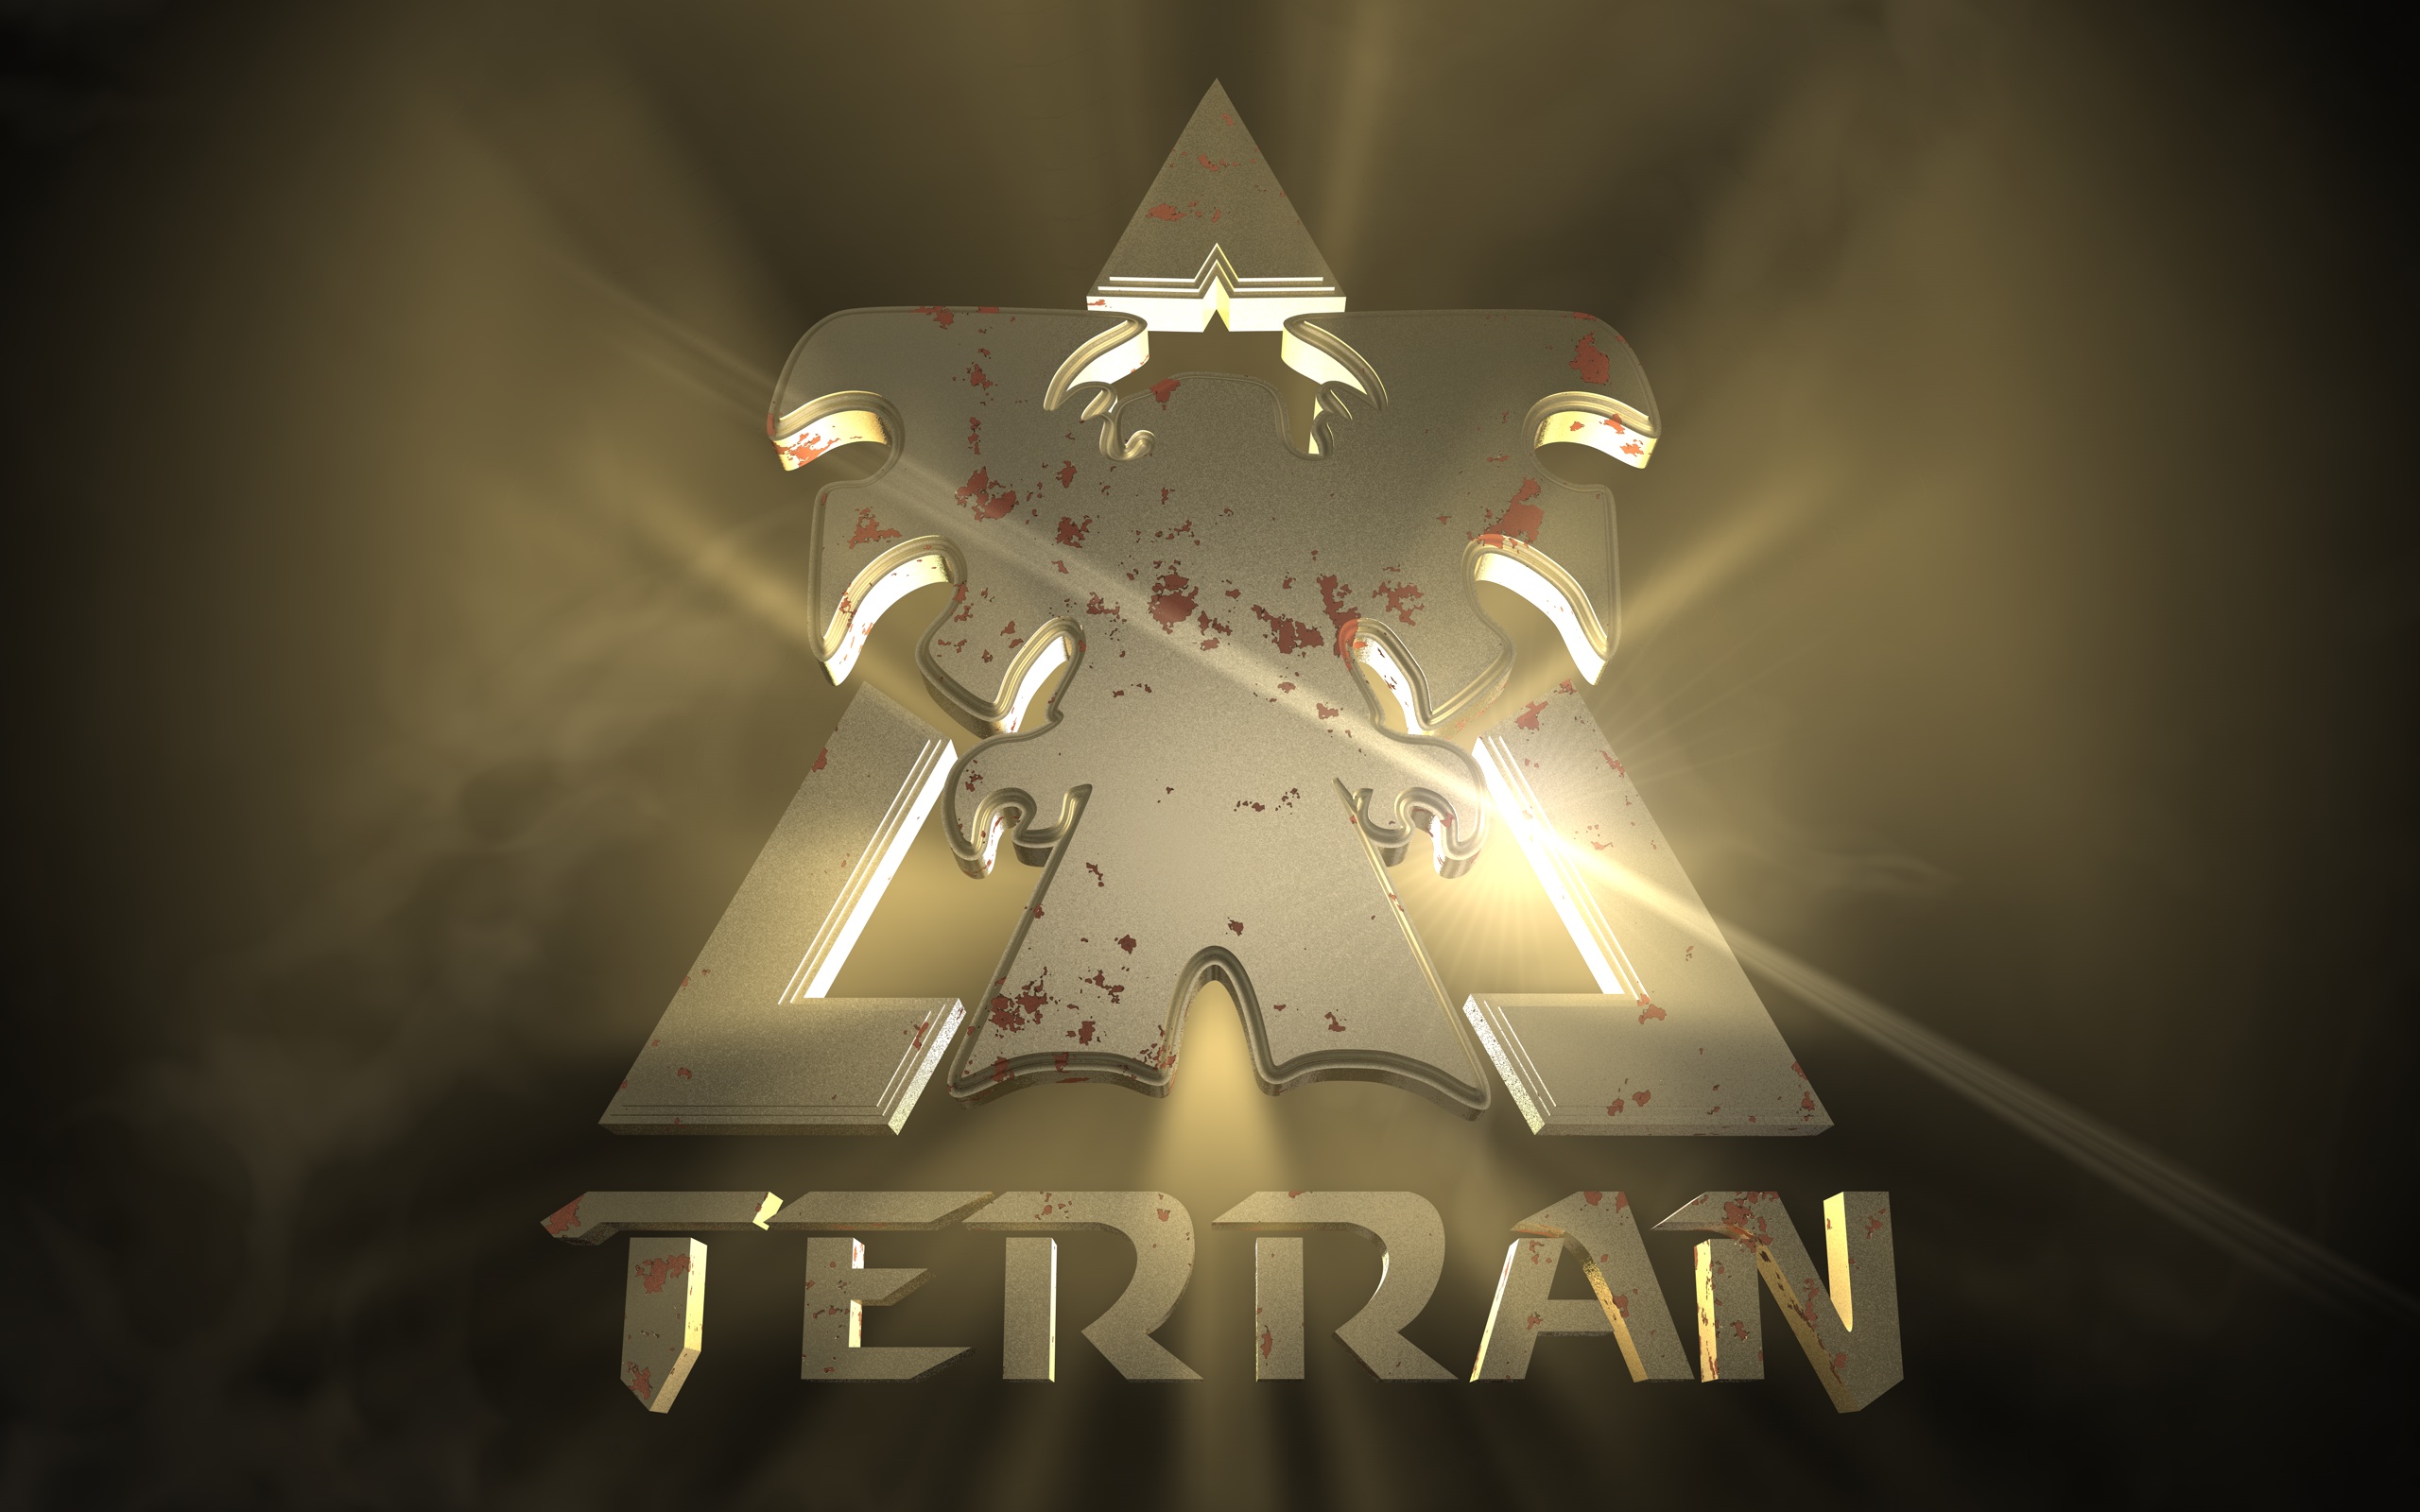 Logo Terran 2560x1600